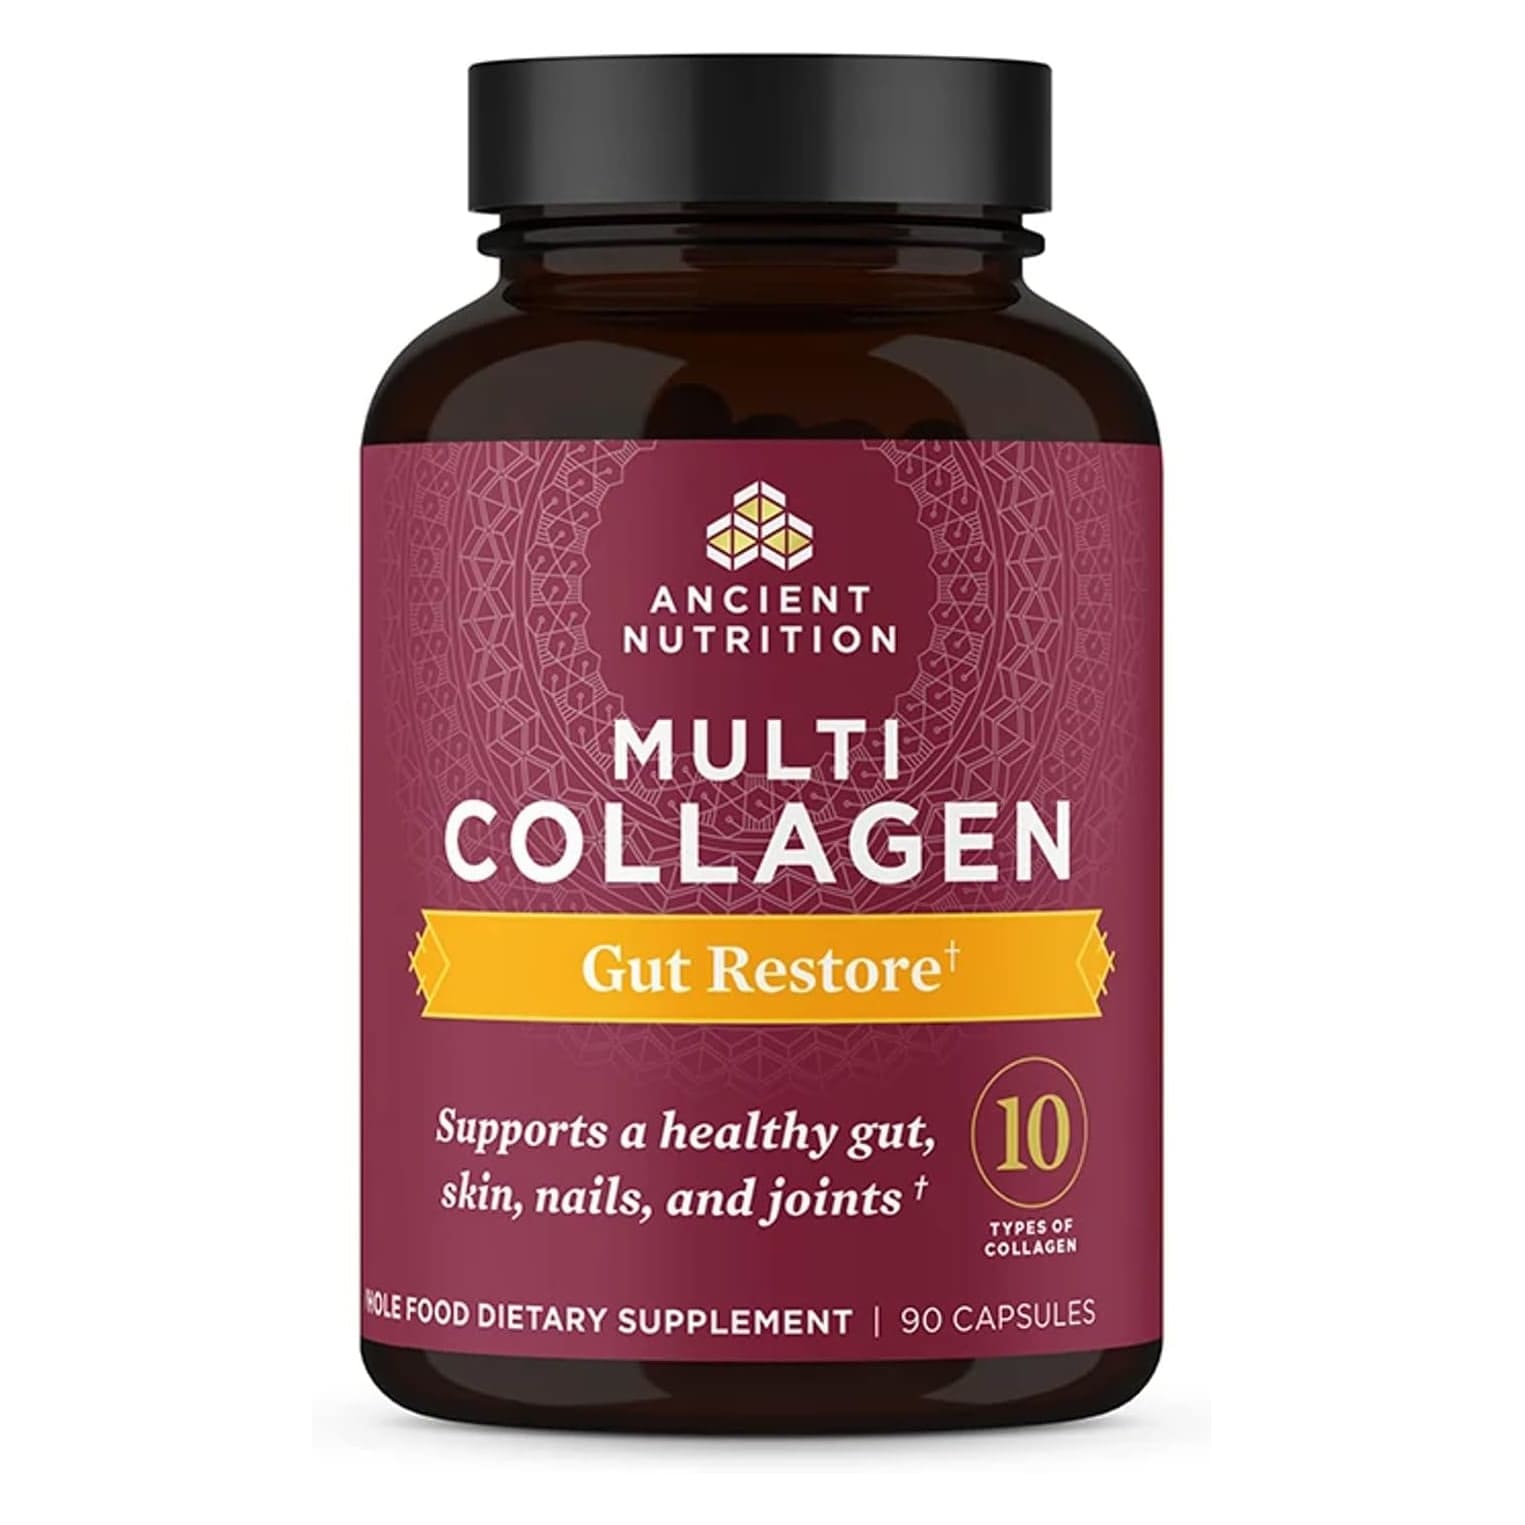 Коллаген Ancient Nutrition Multi Gut Restore 10 Types, 90 капсул коллаген ancient nutrition multi 10 types 90 капсул